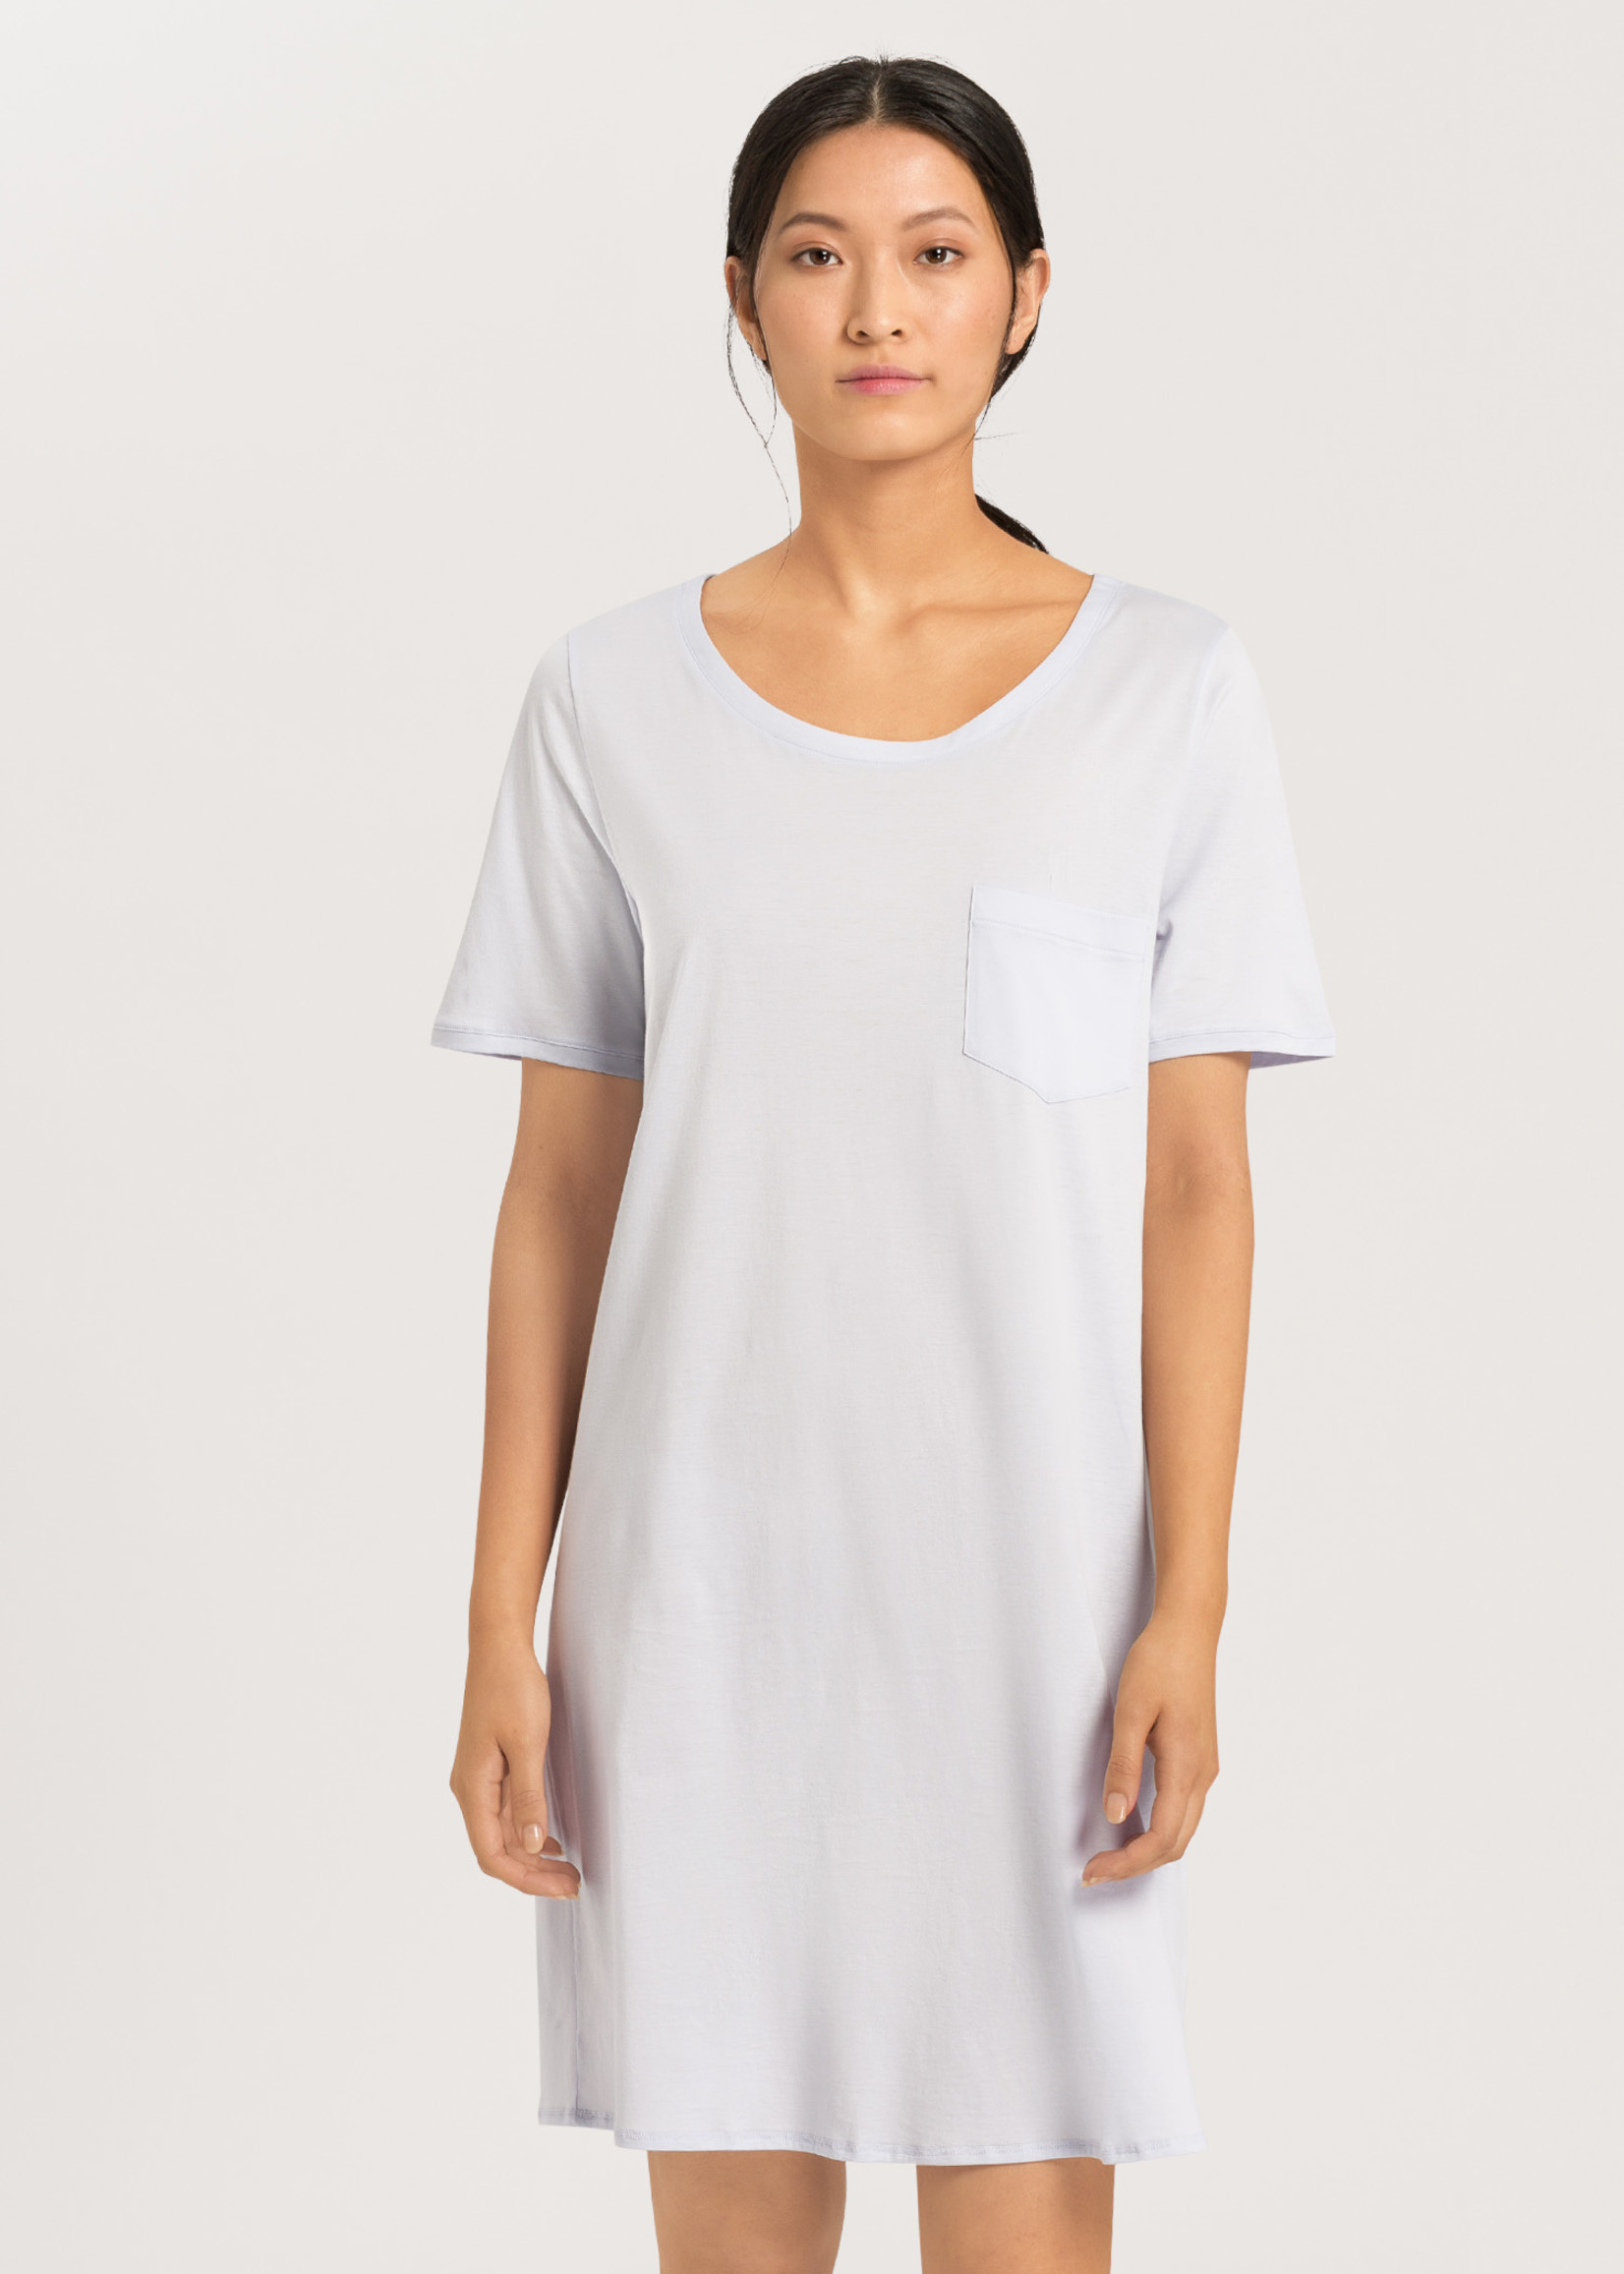 Hanro Cotton Deluxe Short Sleeve Nightshirt